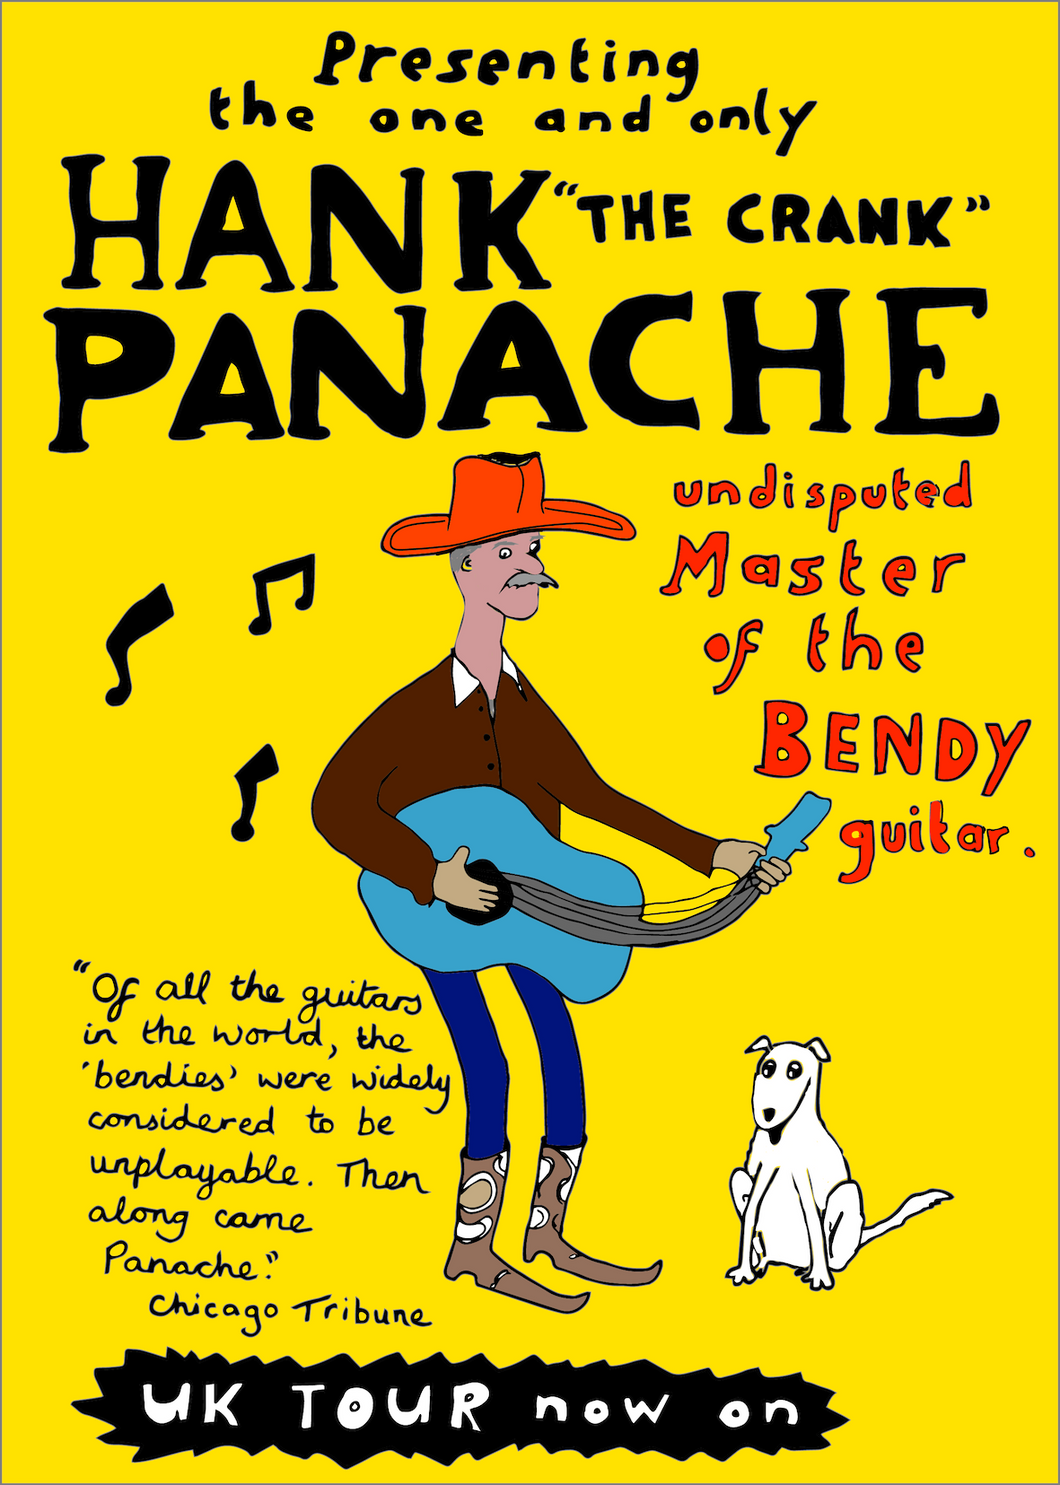 Hank Panache Bendy Guitar poster